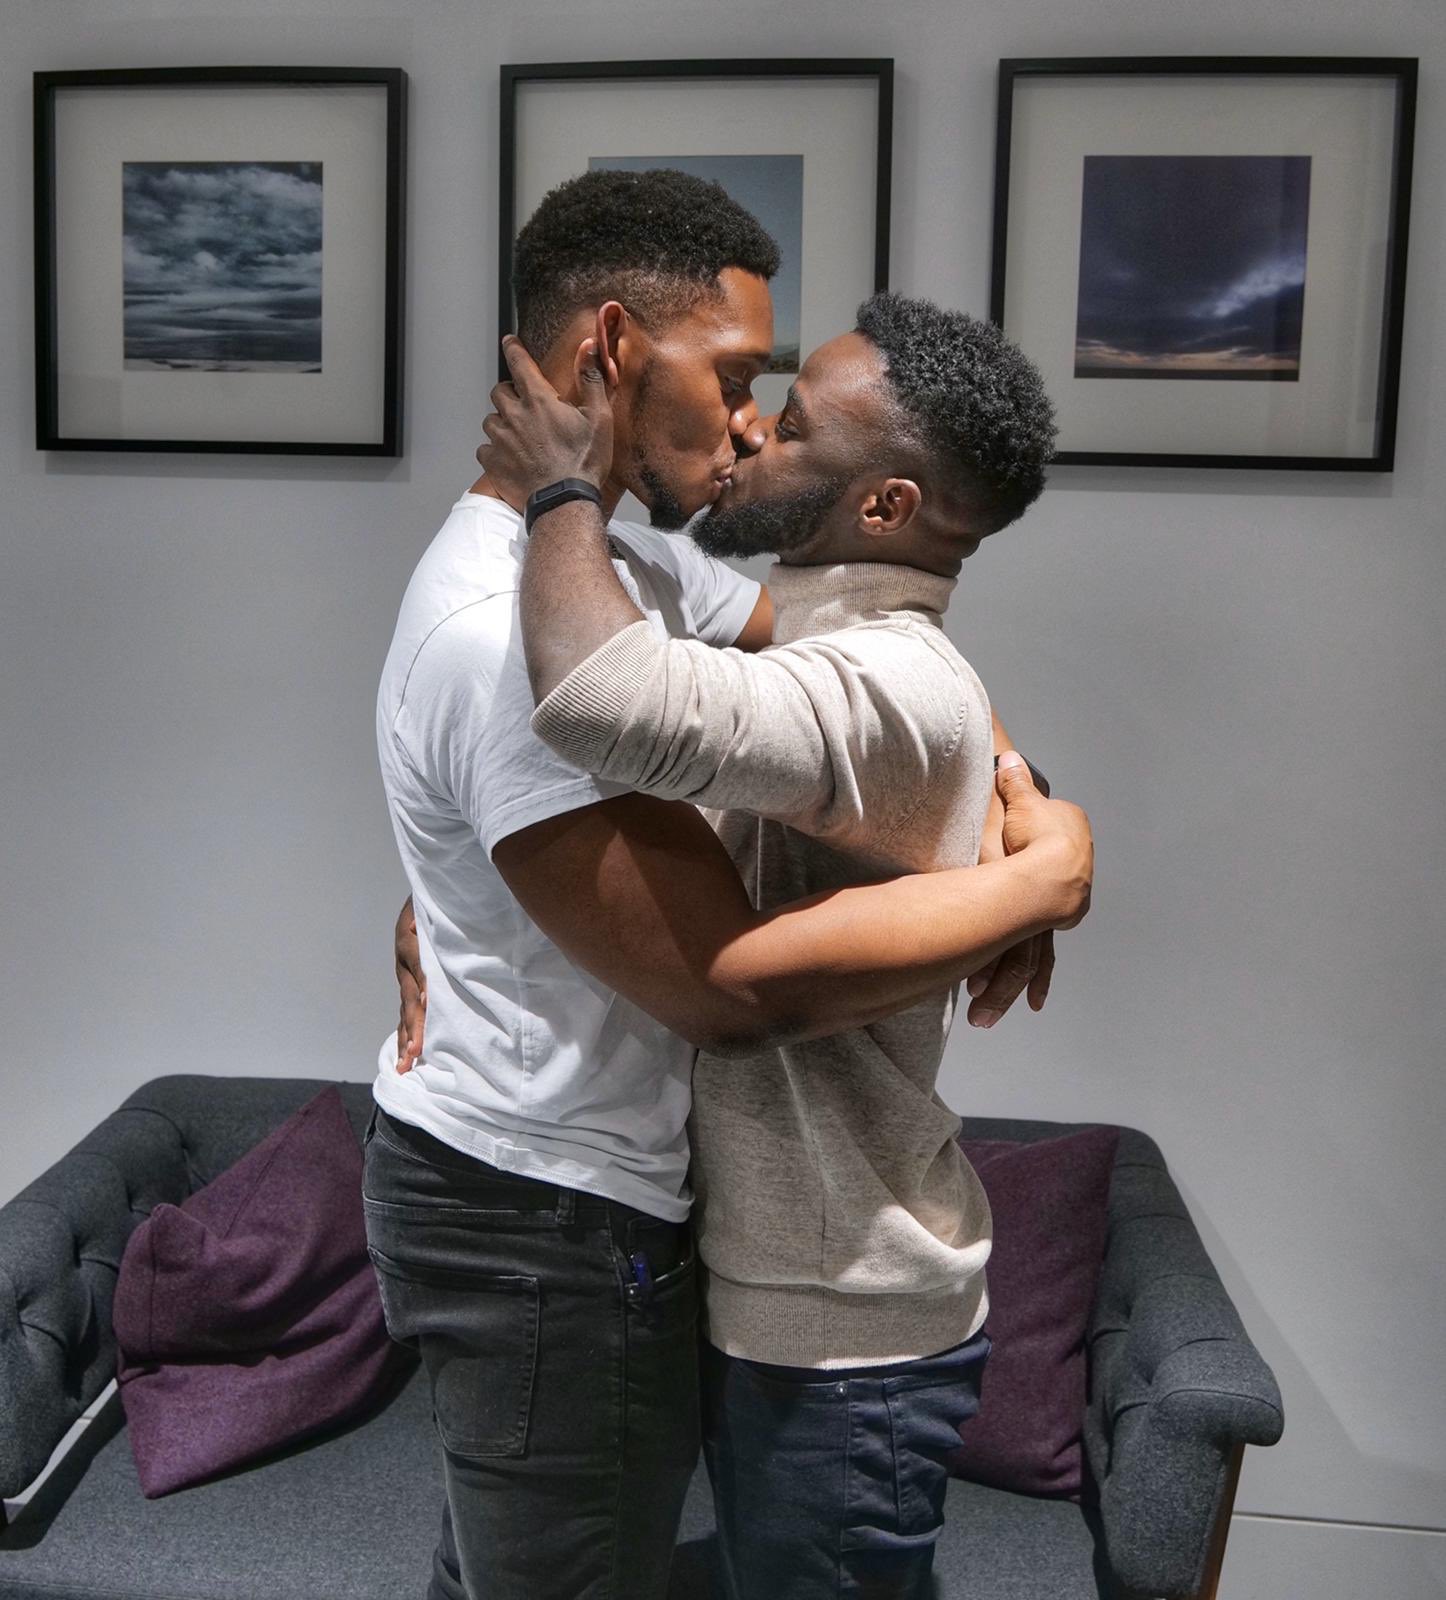 The two Nigerian gay men